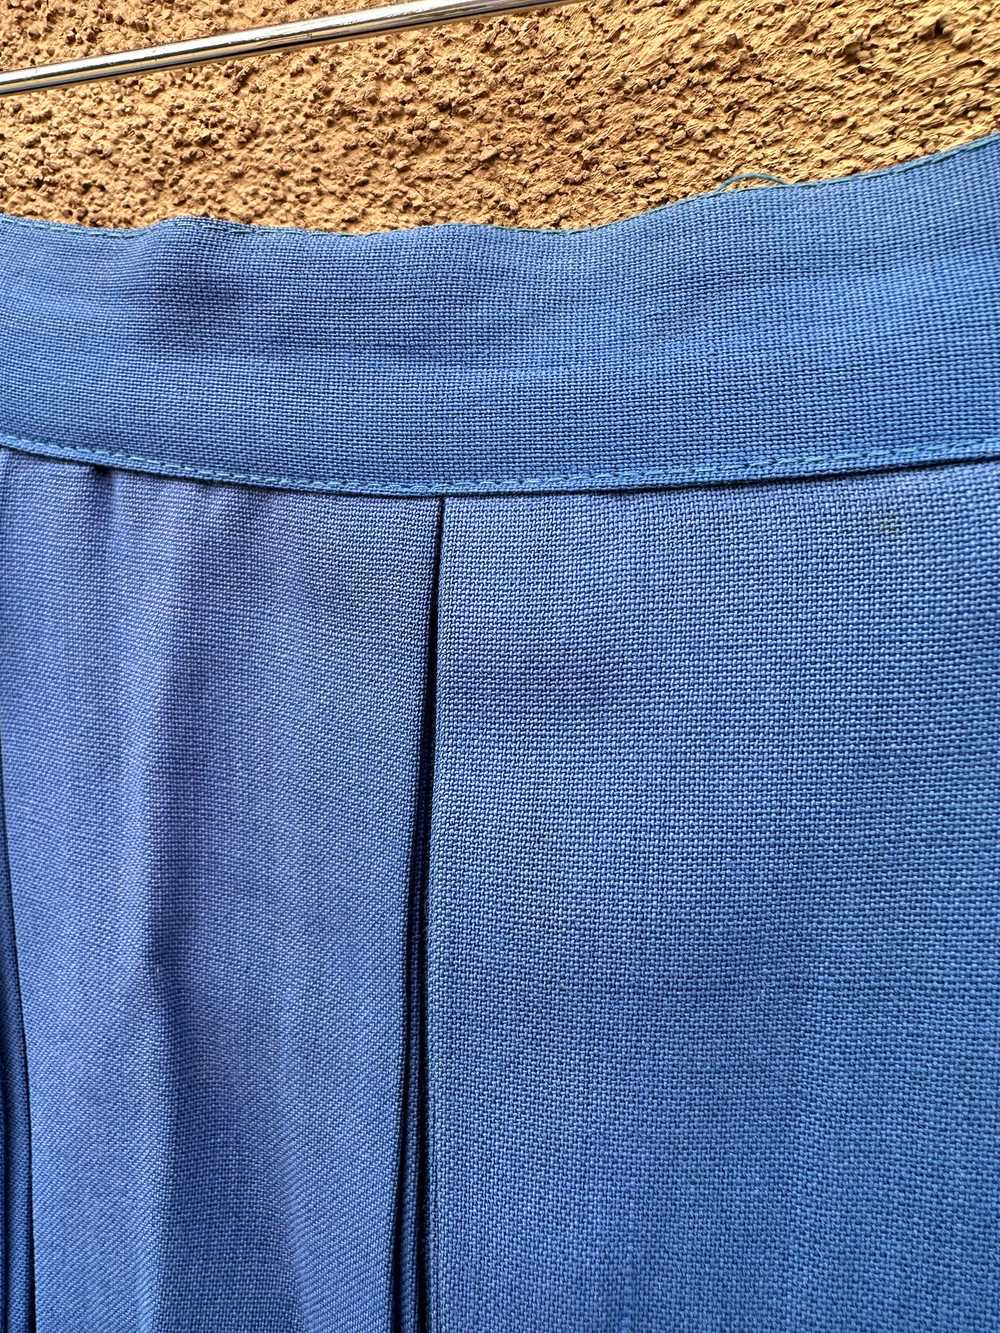 1970's Cornflower Blue Pleated Skirt, Union Made - image 2